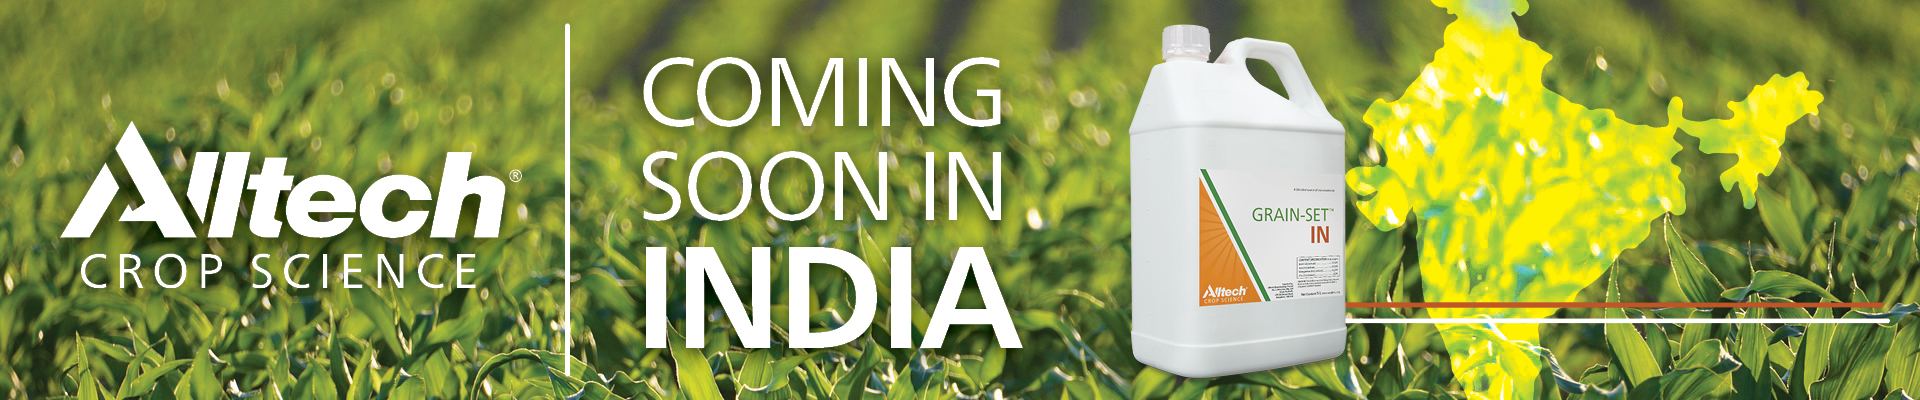 Alltech India Crop Science header image